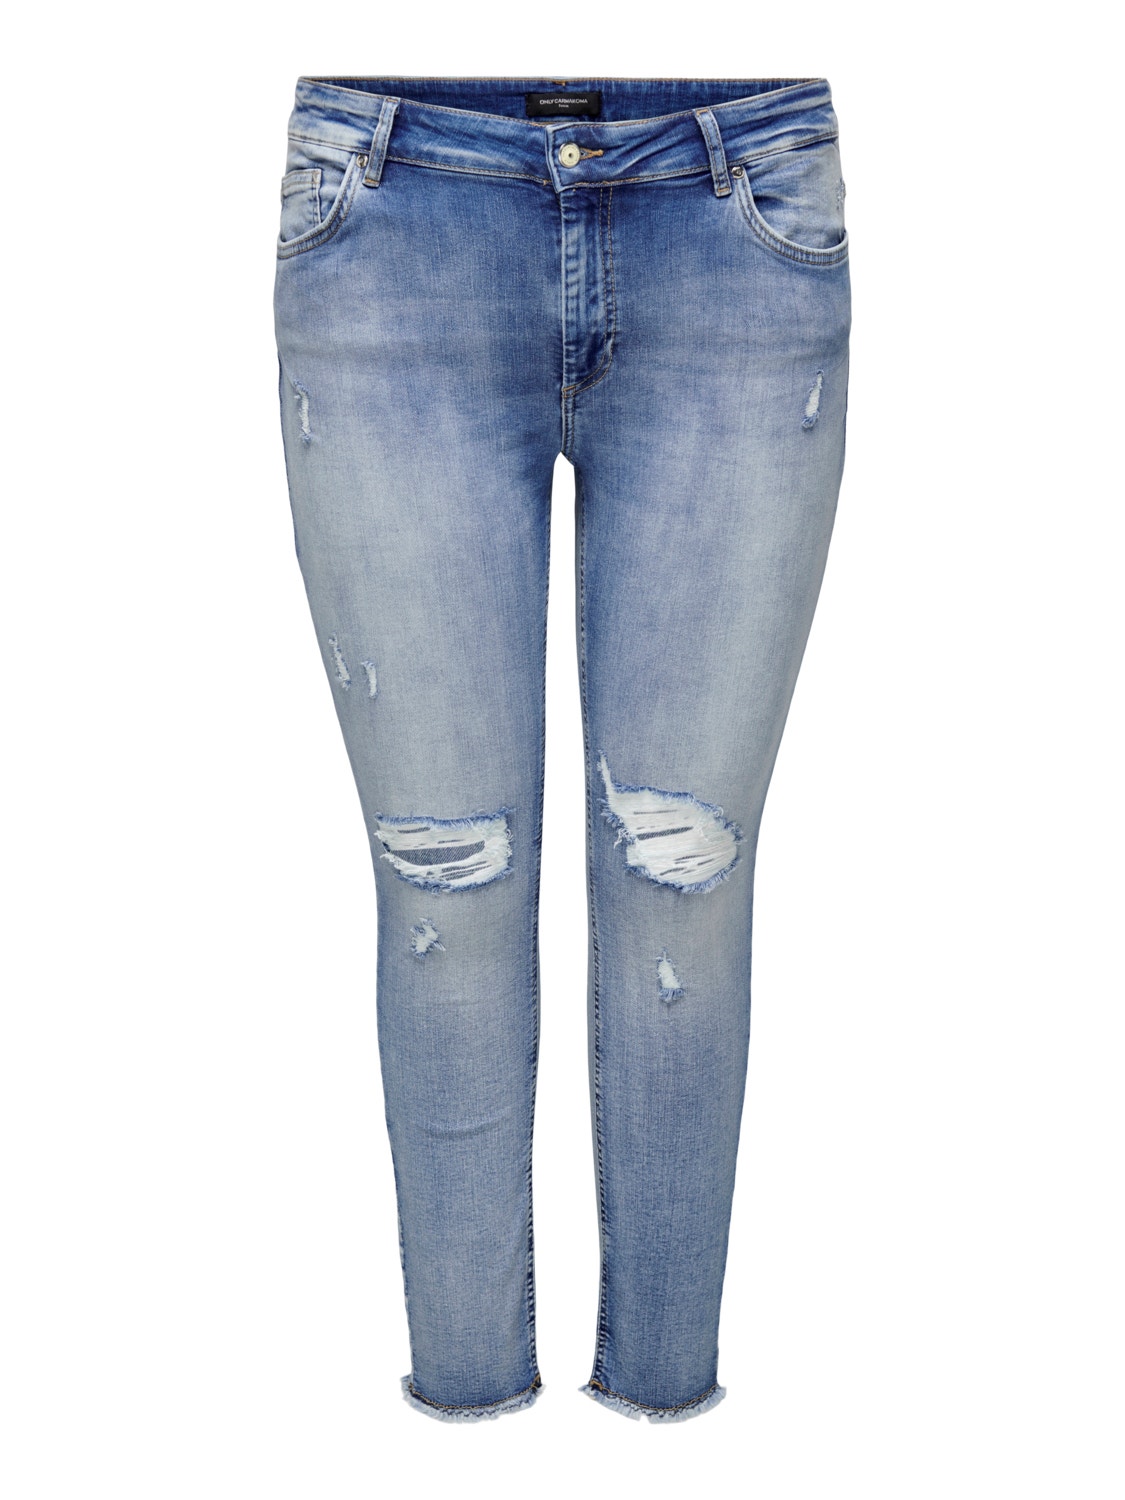 ONLY Jeans Skinny Fit Taille classique Ourlet brut -Light Blue Denim - 15225834